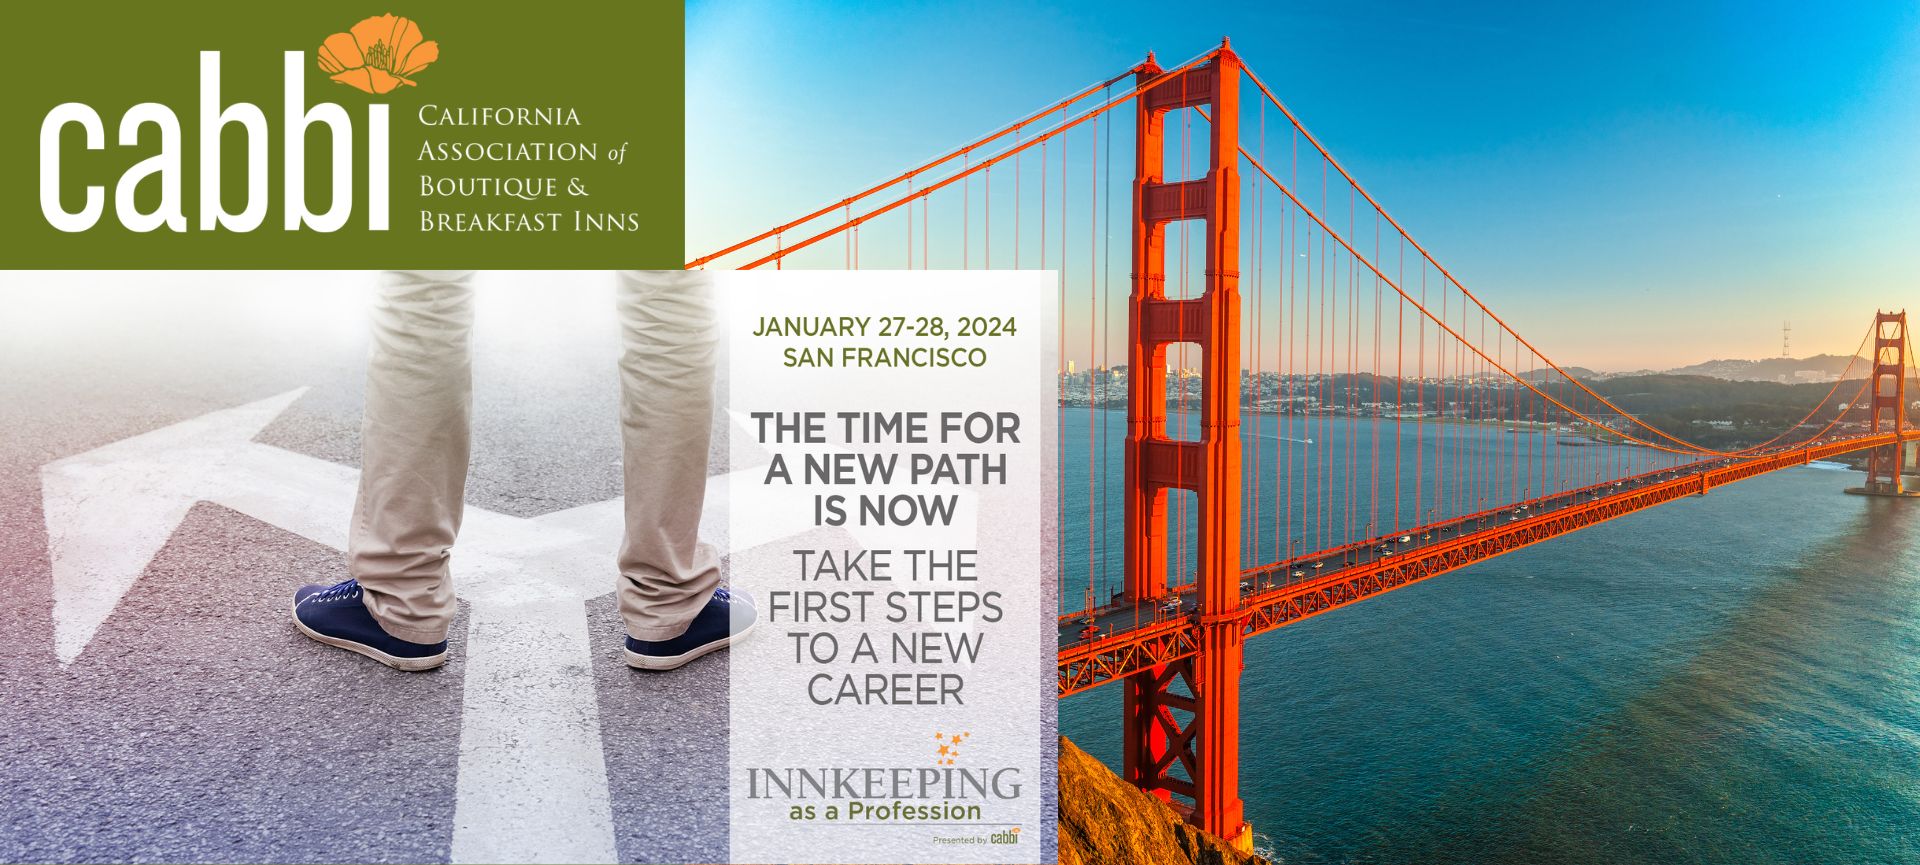 CABBI Aspiring Innkeeper Workshop - January 27-28, 2024, San Francisco, CA